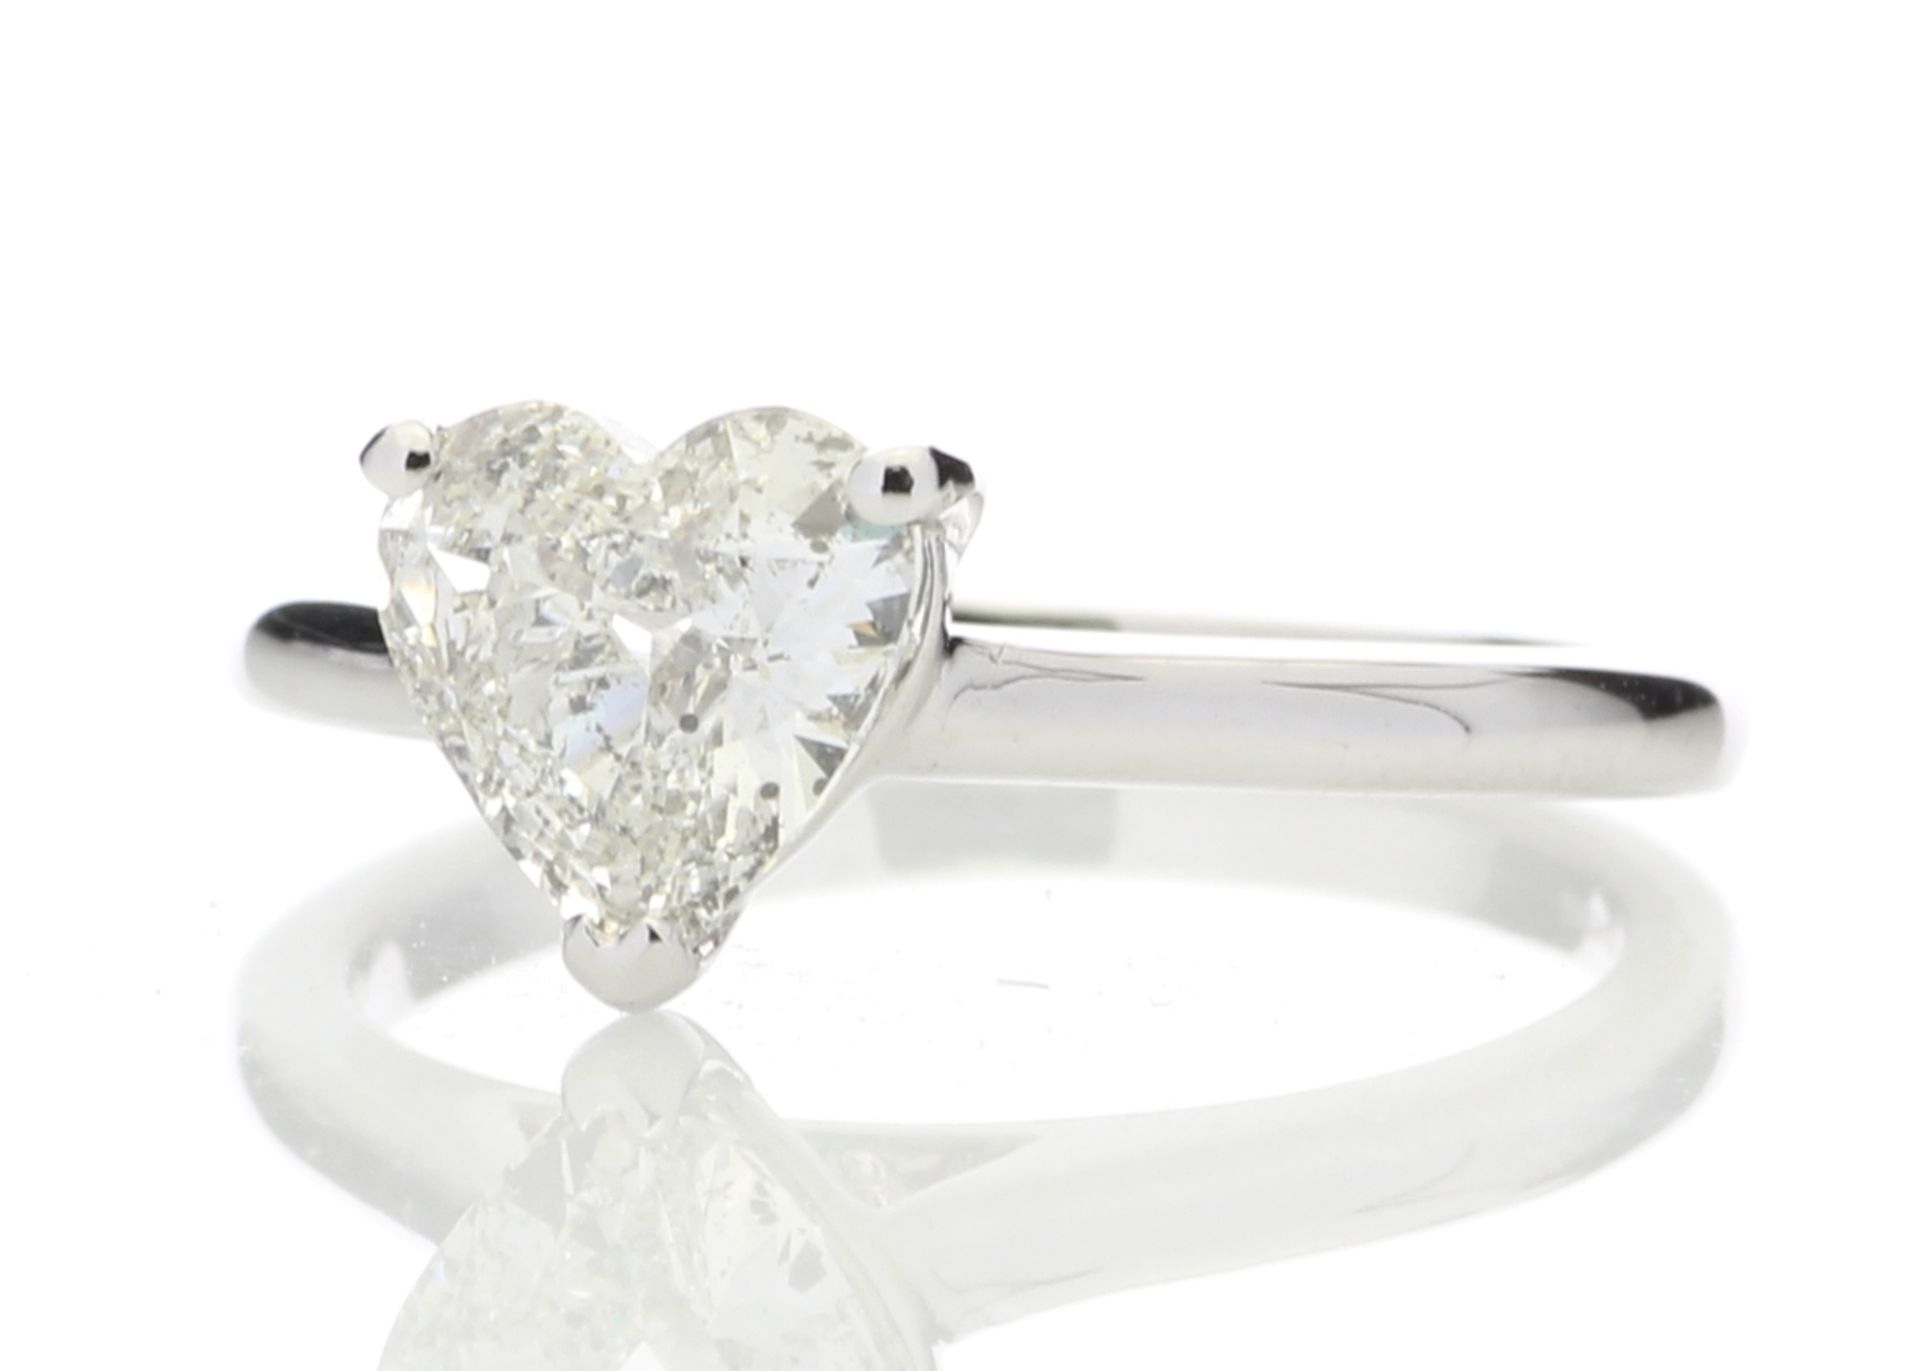 18ct White Gold Single Stone Heart Cut Diamond Ring 1.04 Carats - Image 2 of 5